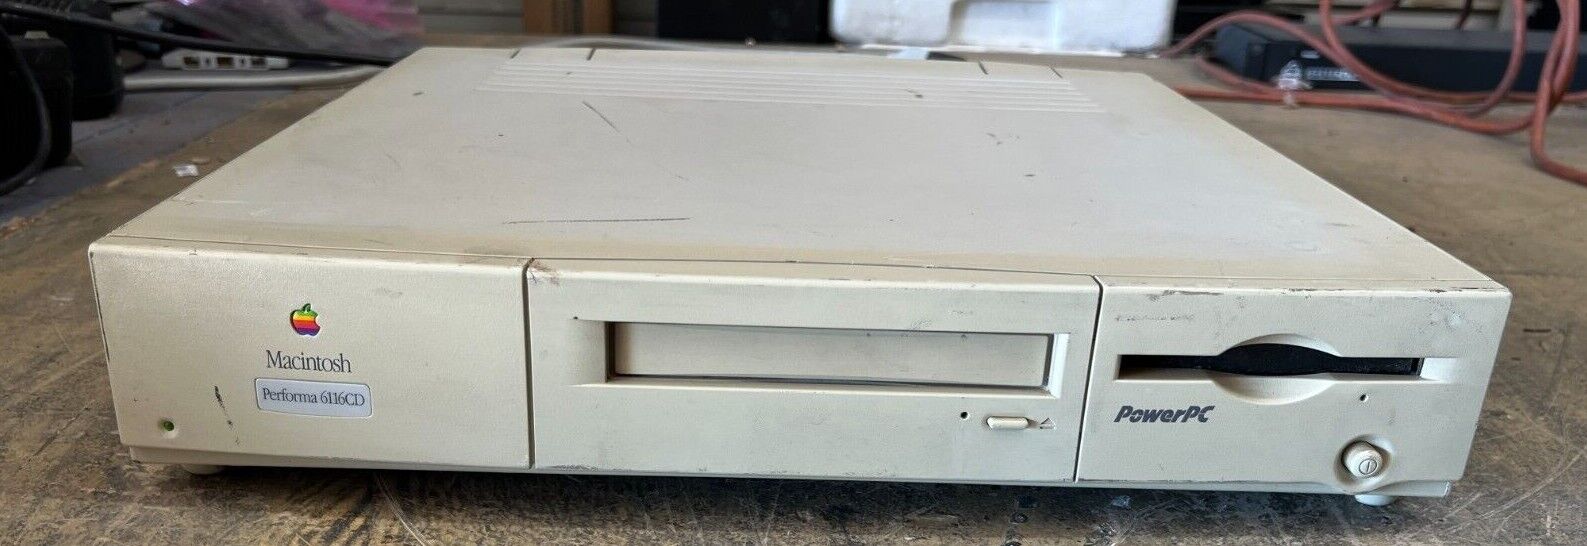 Apple Macintosh Performa 6116CD Computer - Model: M1596